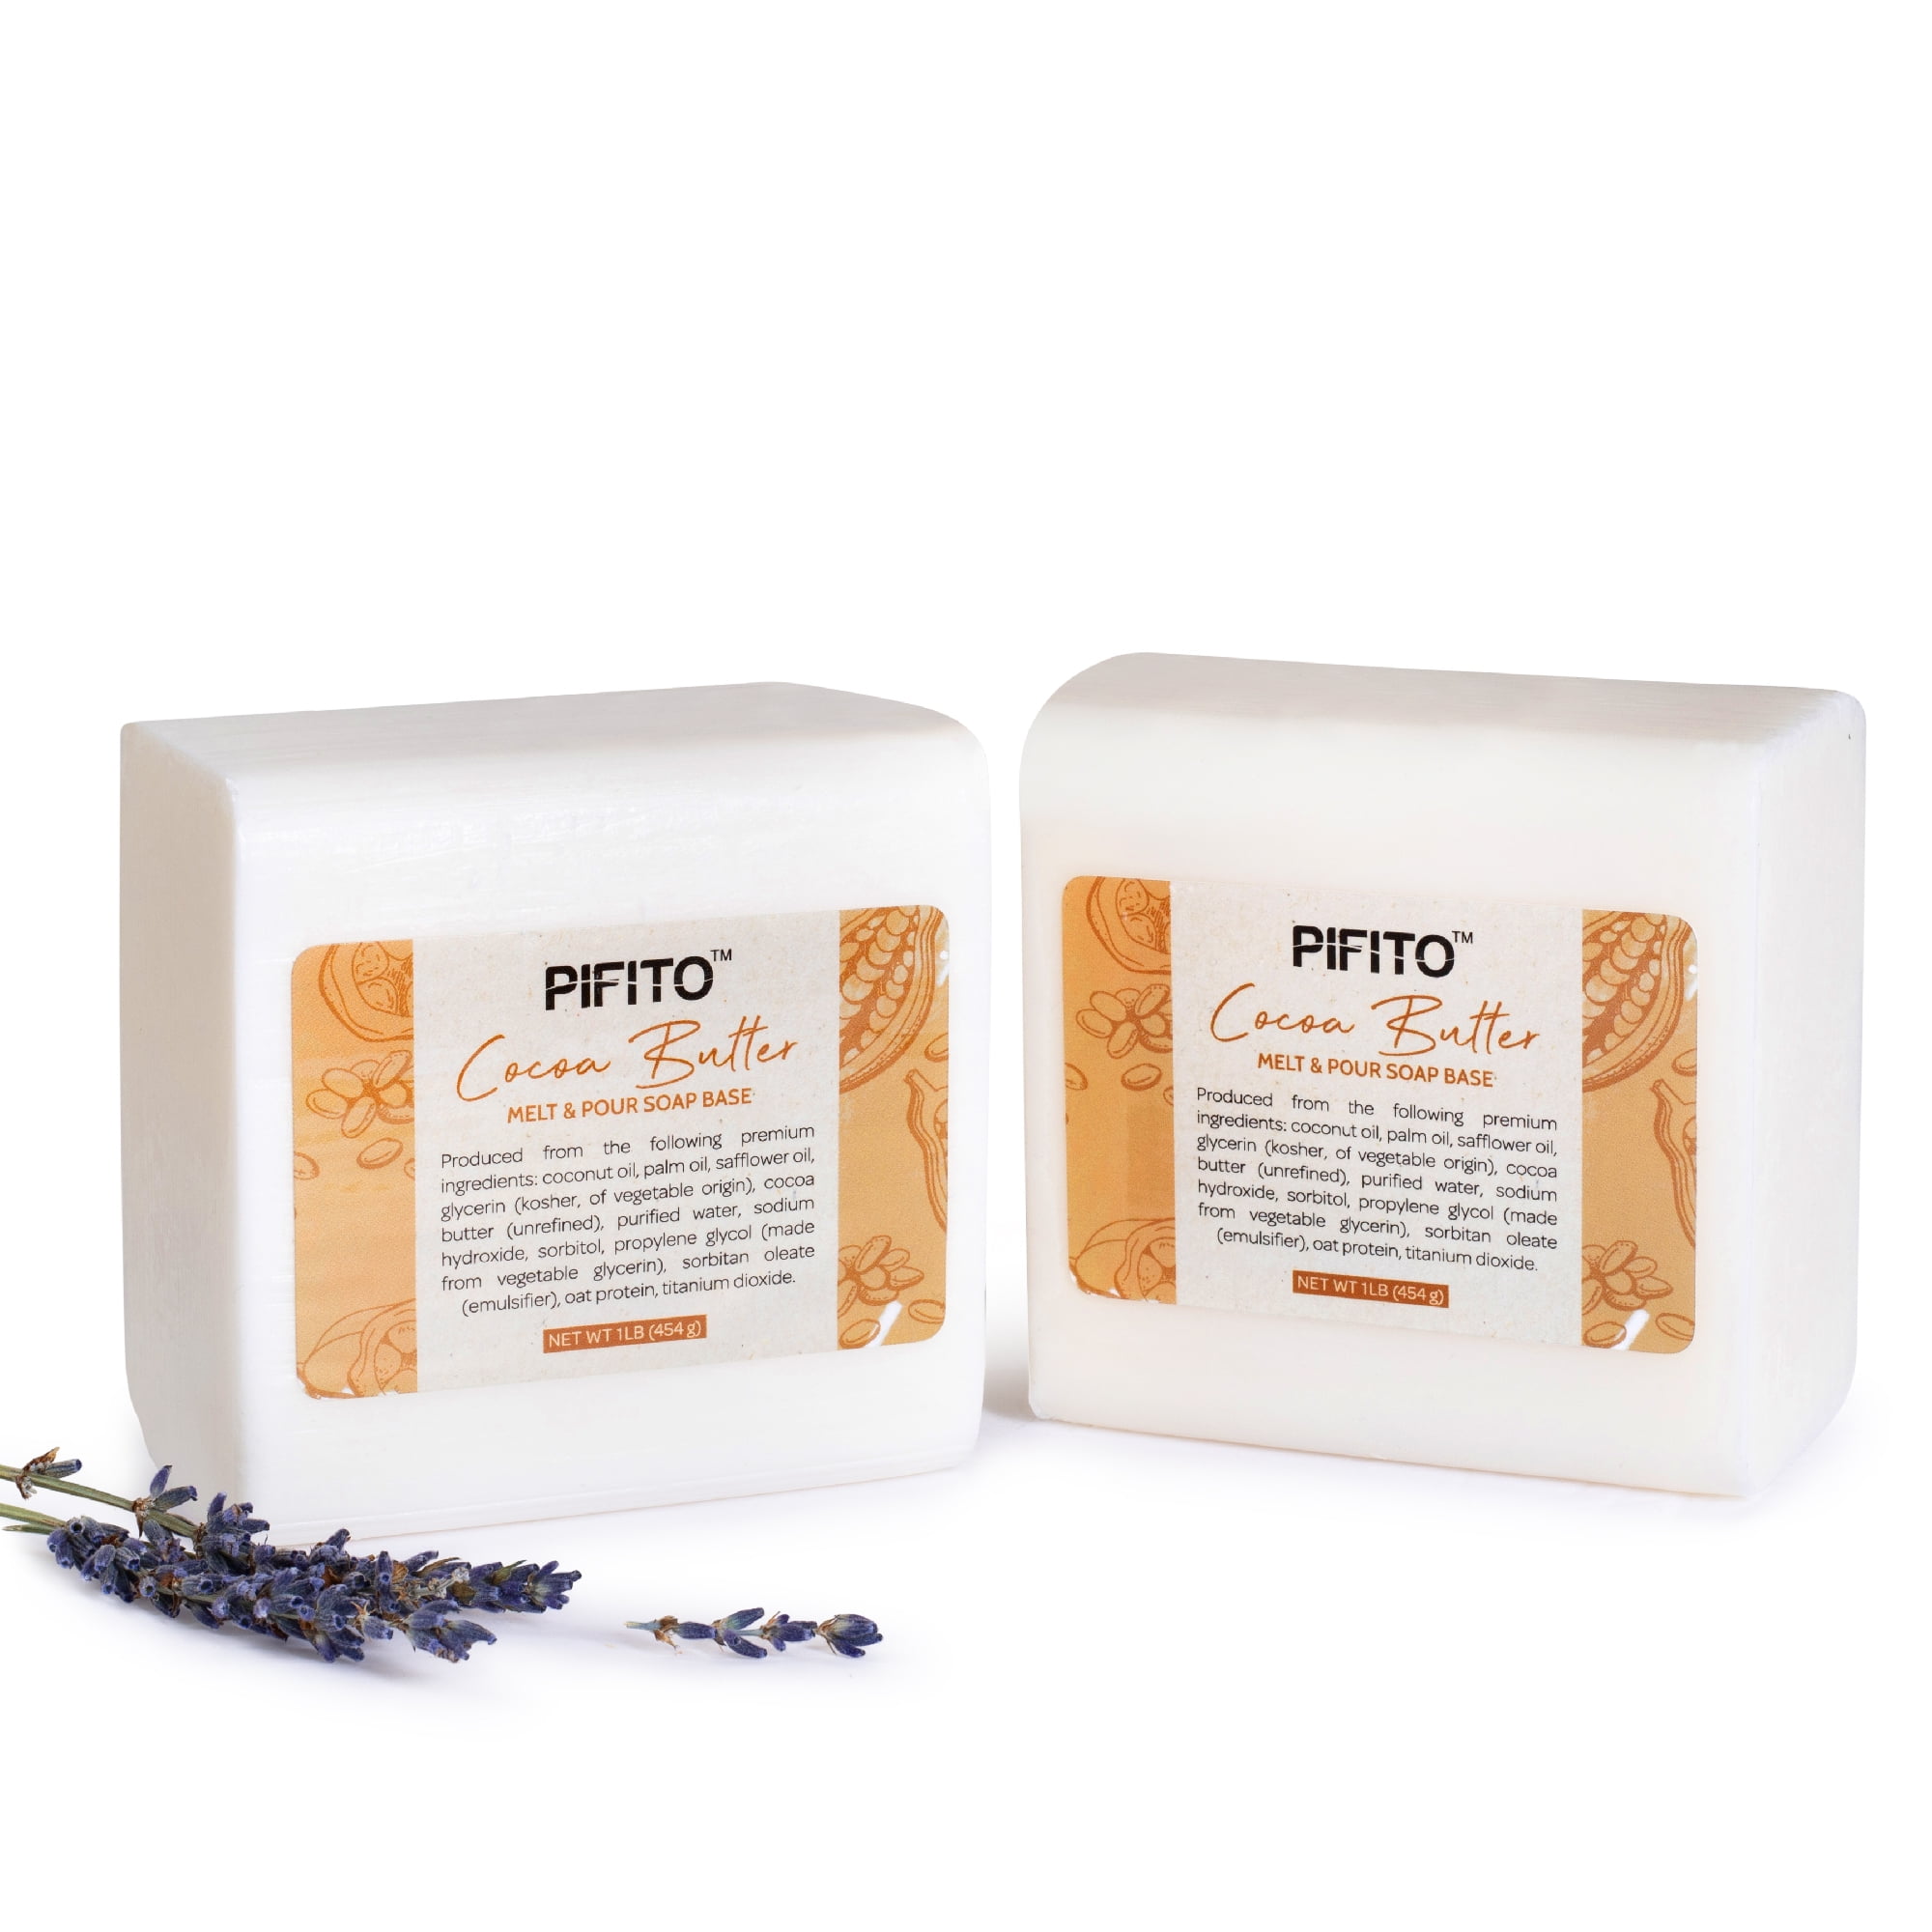 Pifito Cocoa Butter Melt and Pour Soap Base (2 lb) │ Premium 100